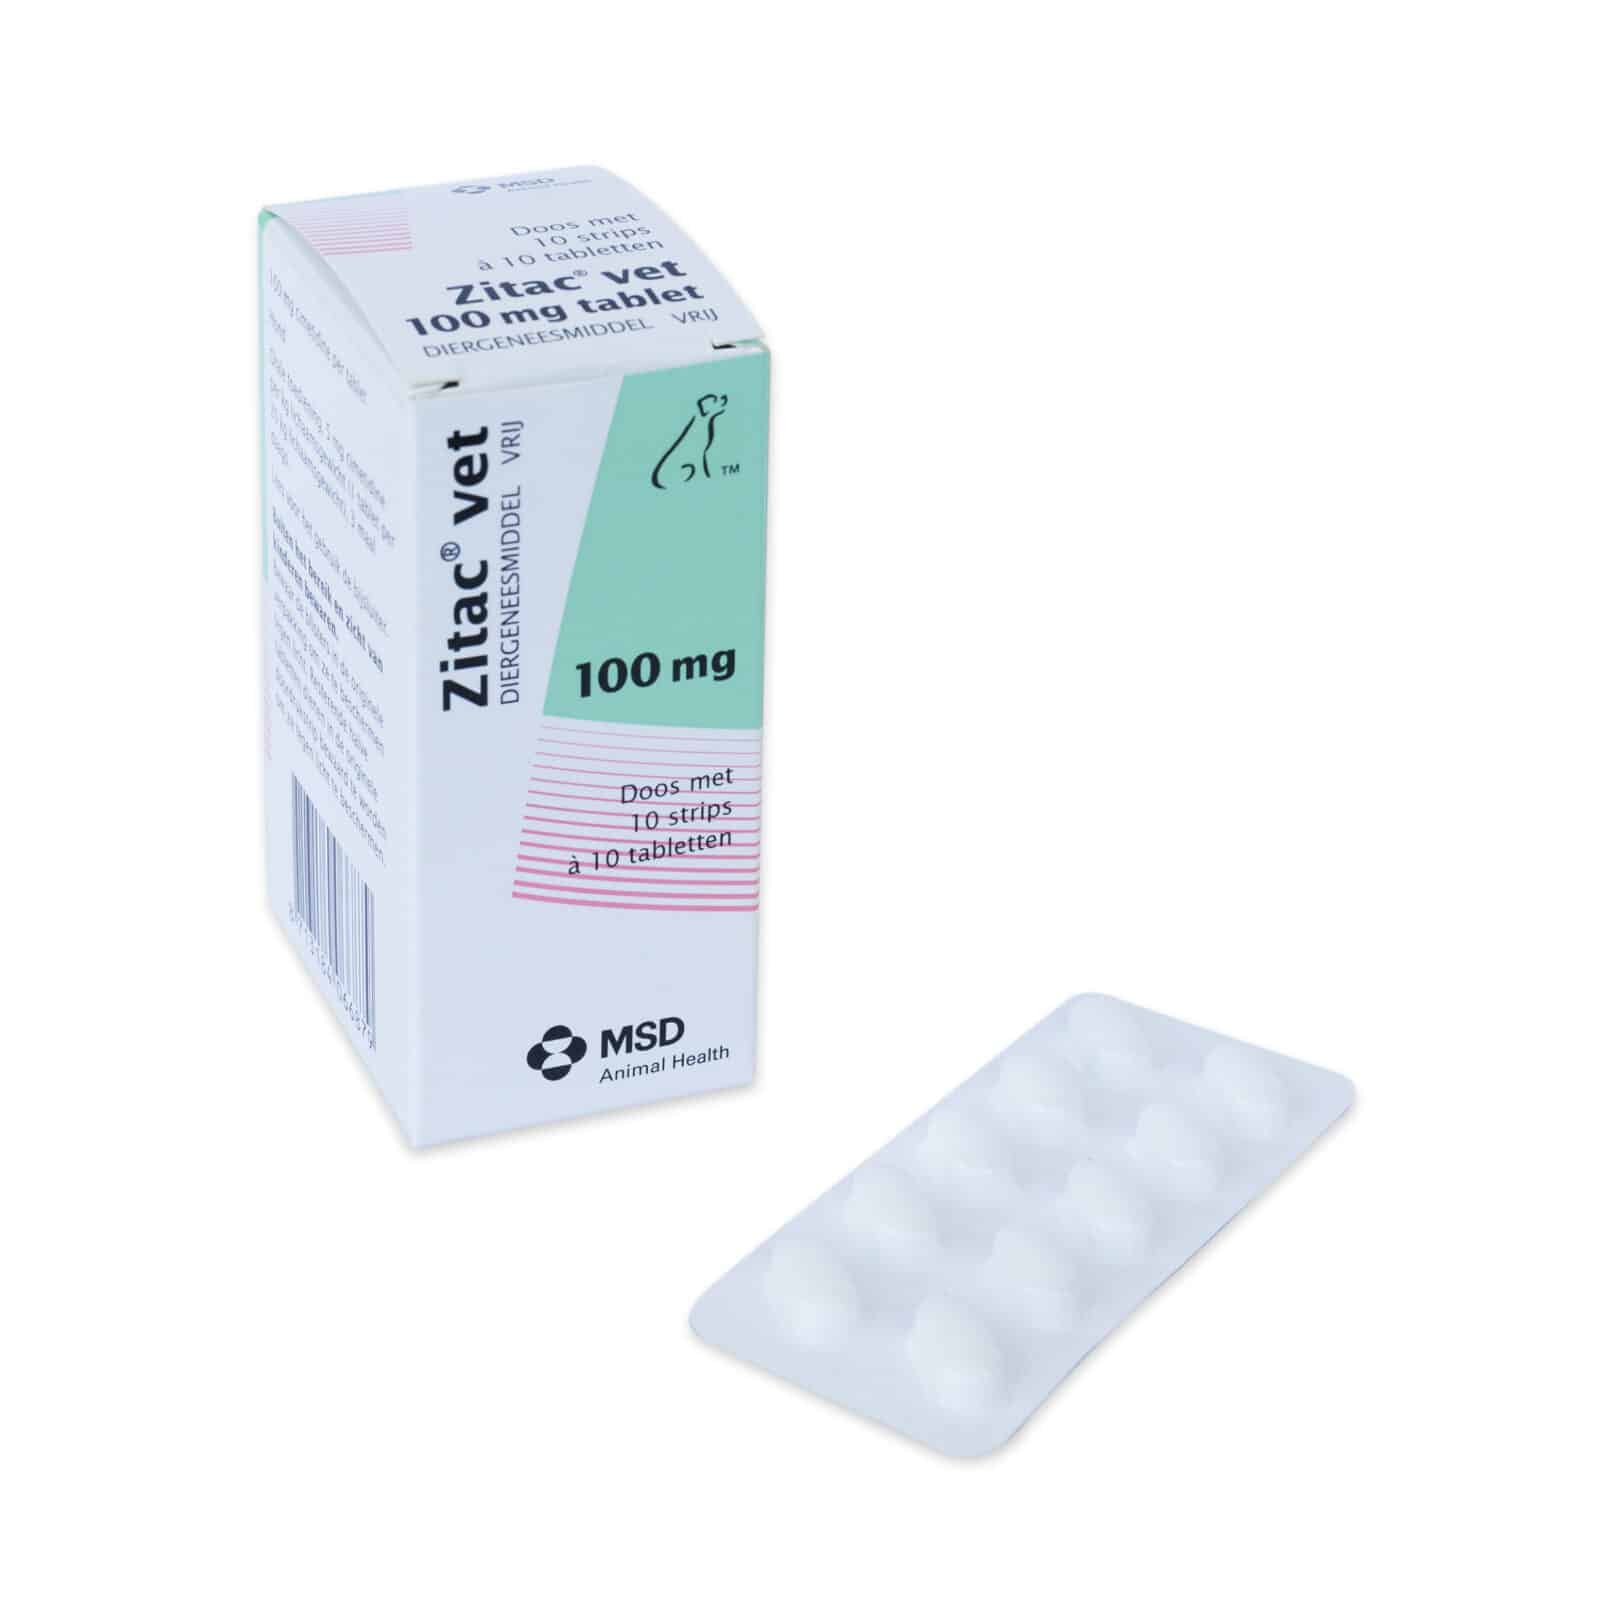 Zitac Vet 100 mg-2